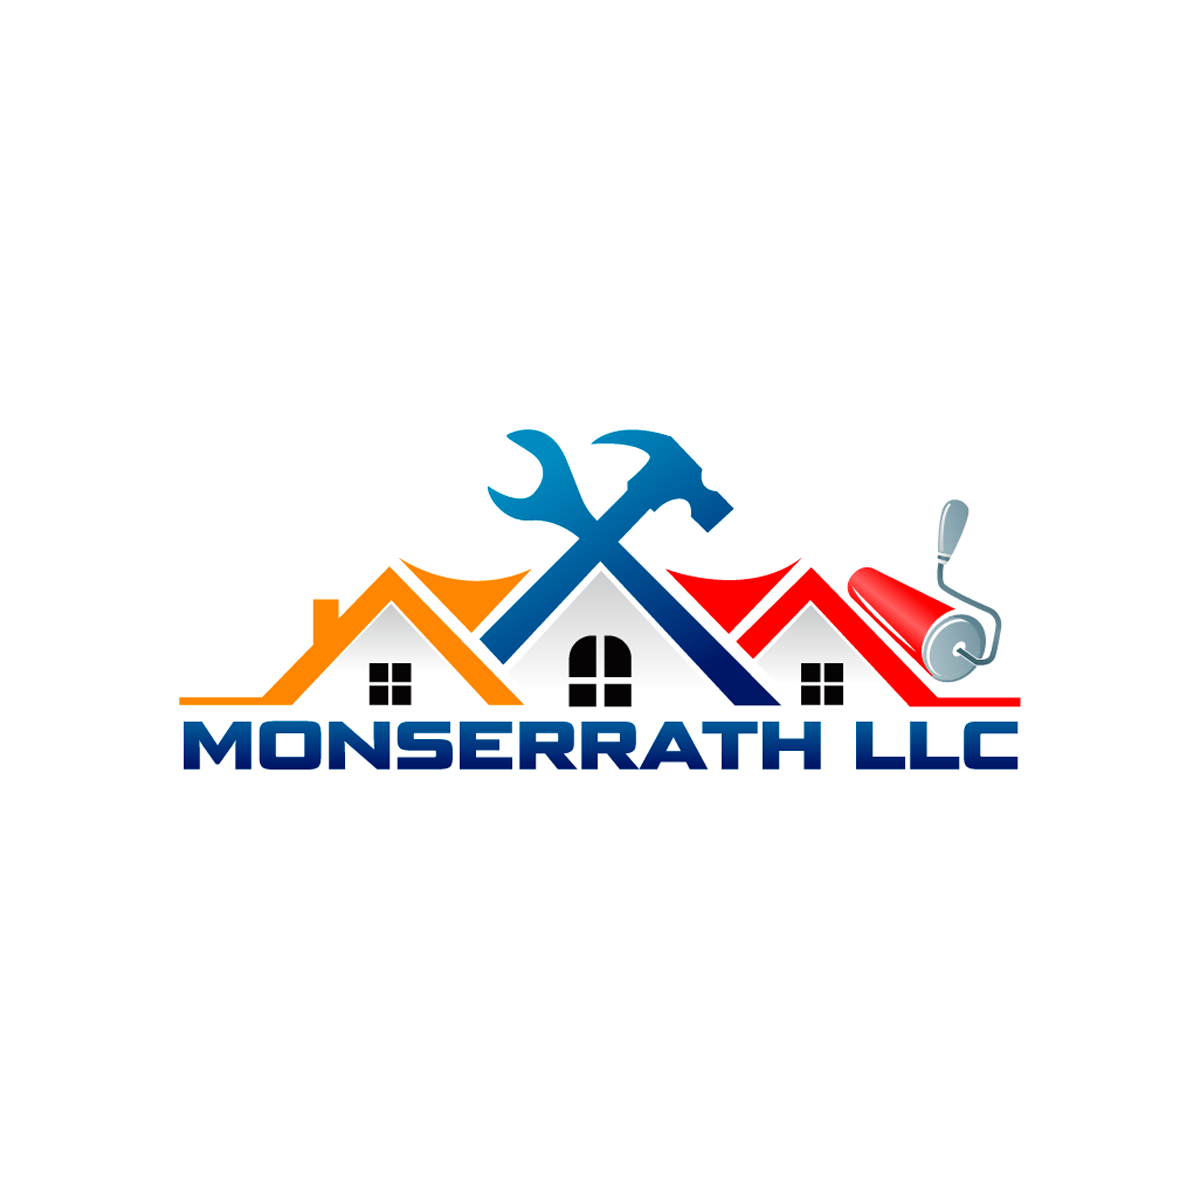 Monserrath LLC